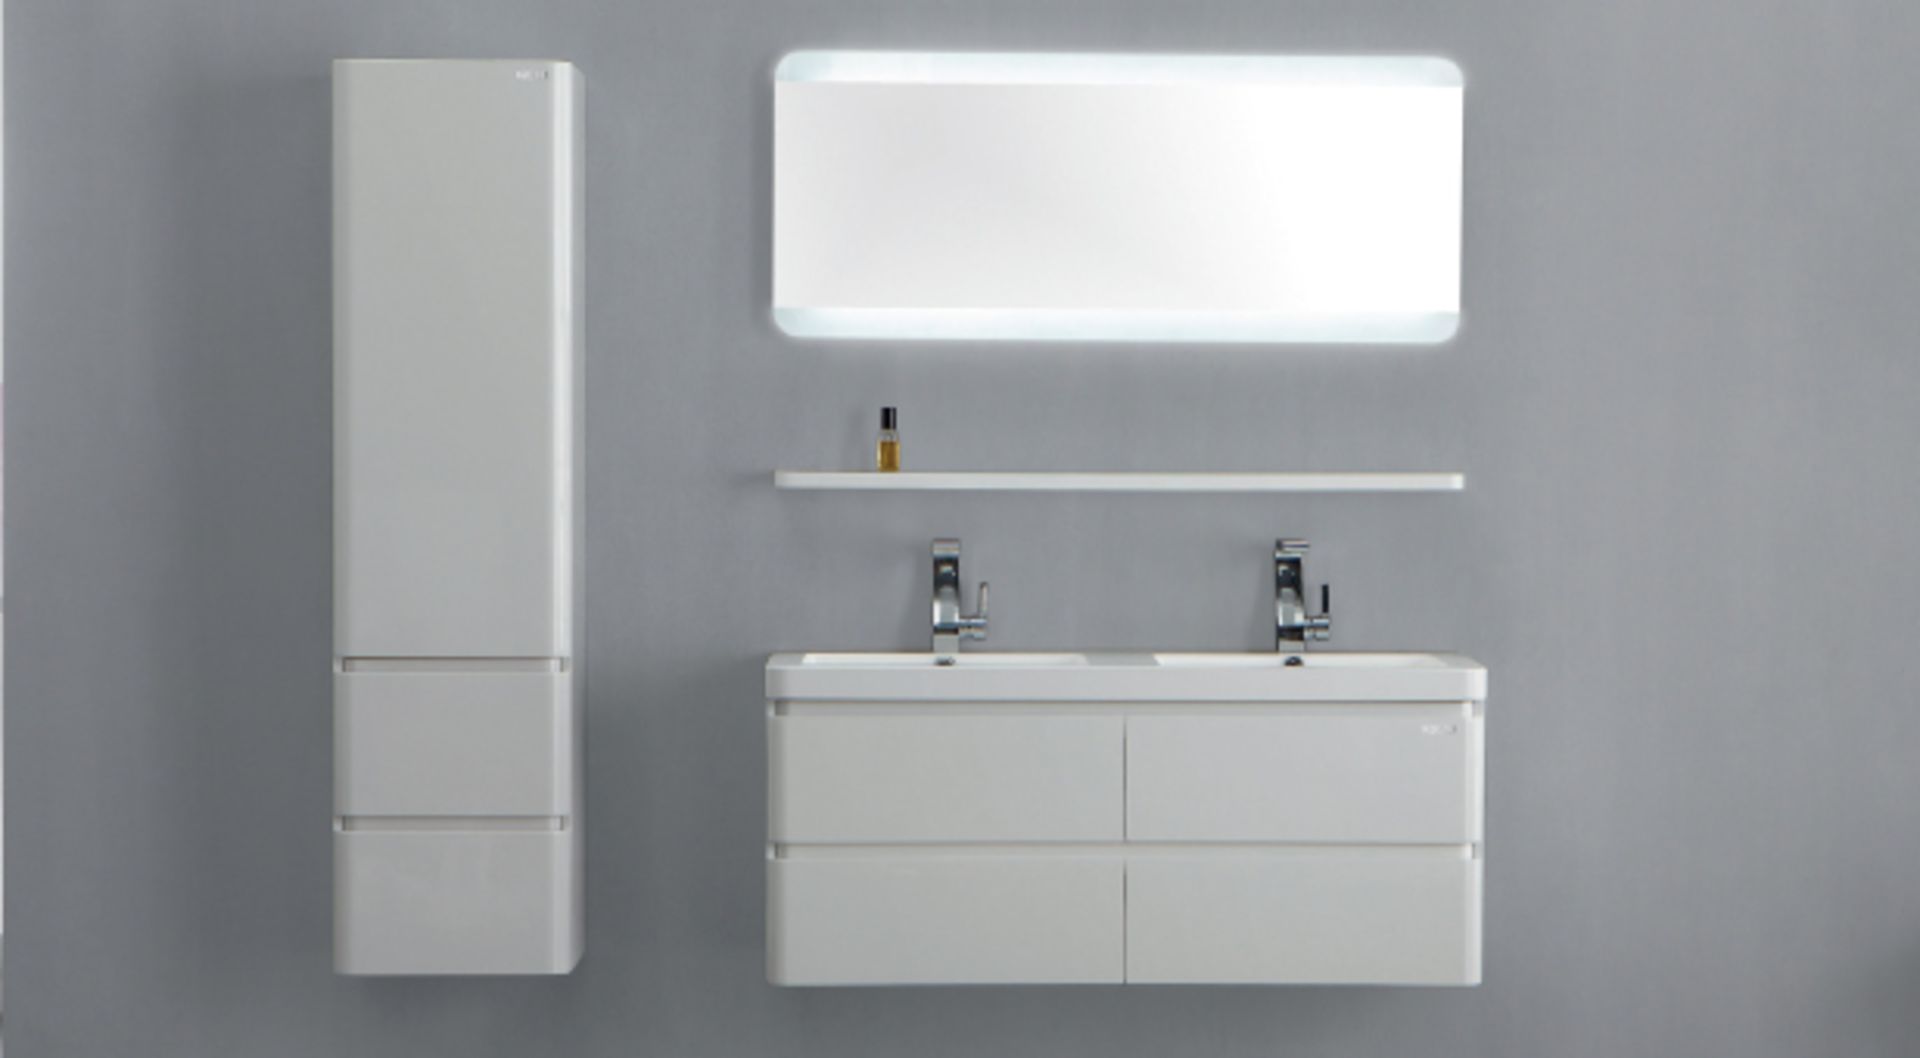 1 x Stylish Bathroom Edge Back-lit Mirror 120 - A-Grade - Ref:AMR11-120 - CL170 - Location: Nottingh